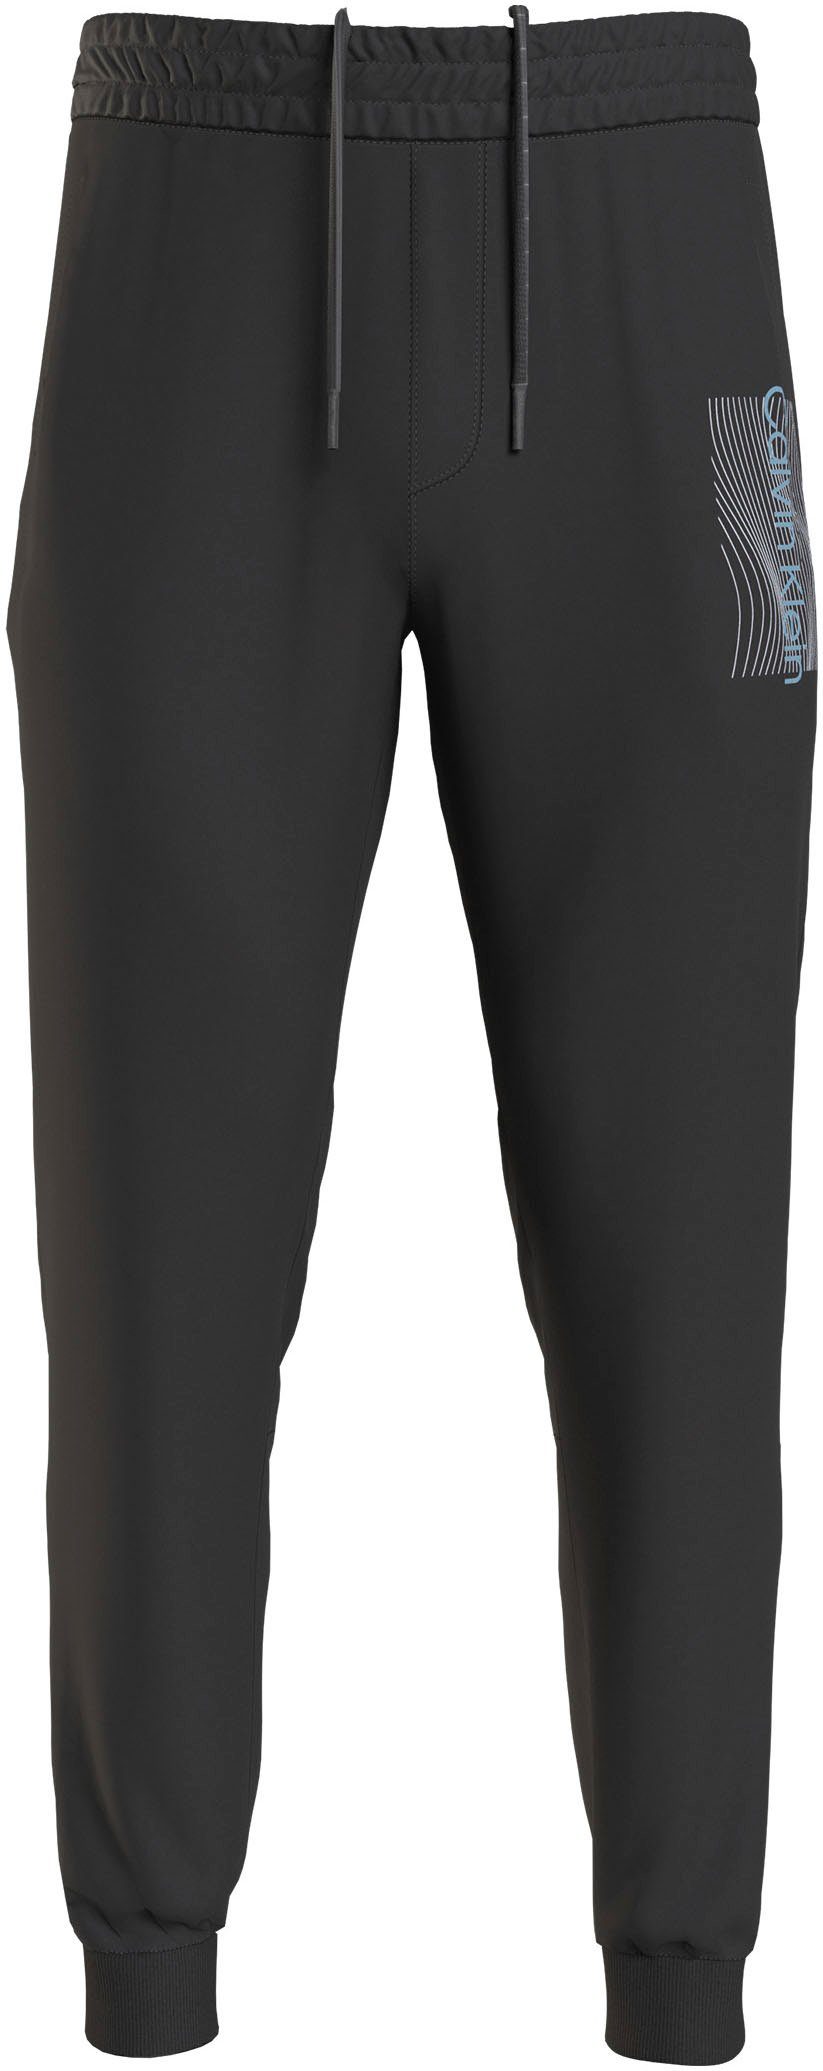 Calvin Klein Sweatpants WAVE LINES mit SWEATPANTS Black Ck Markenlabel HERO LOGO